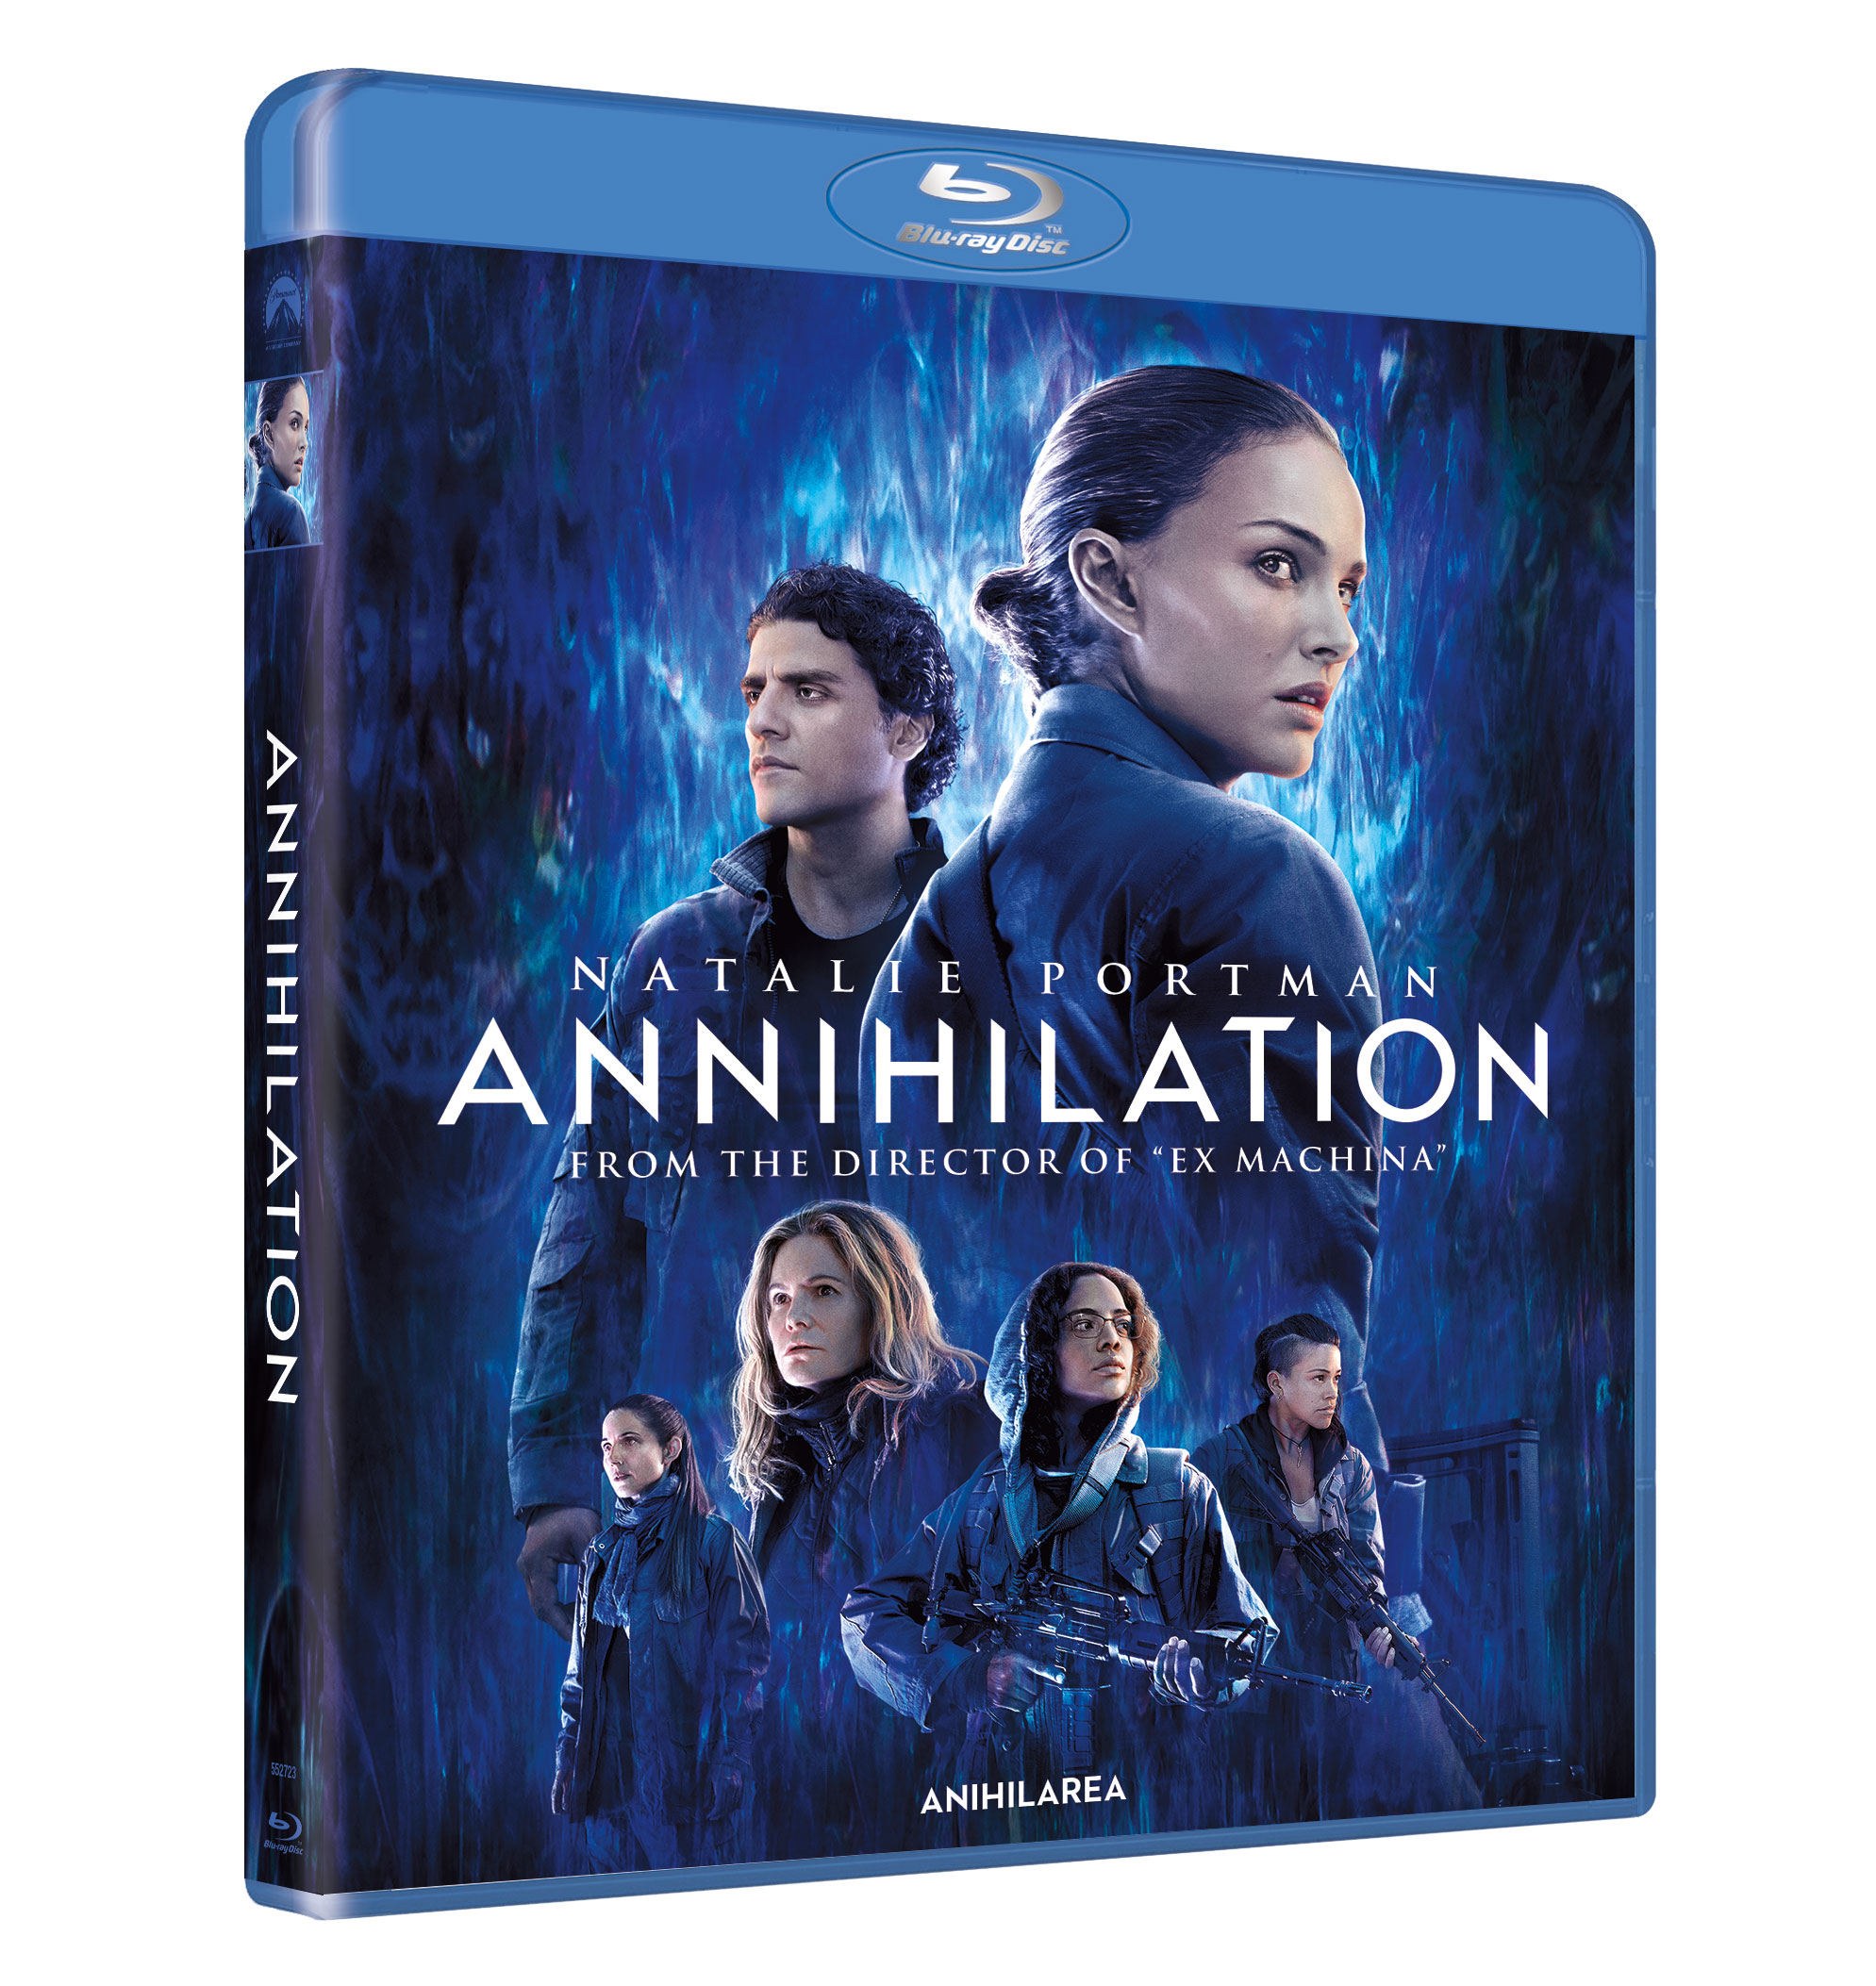 Anihilarea / Annihilation (Blu-Ray Disc)